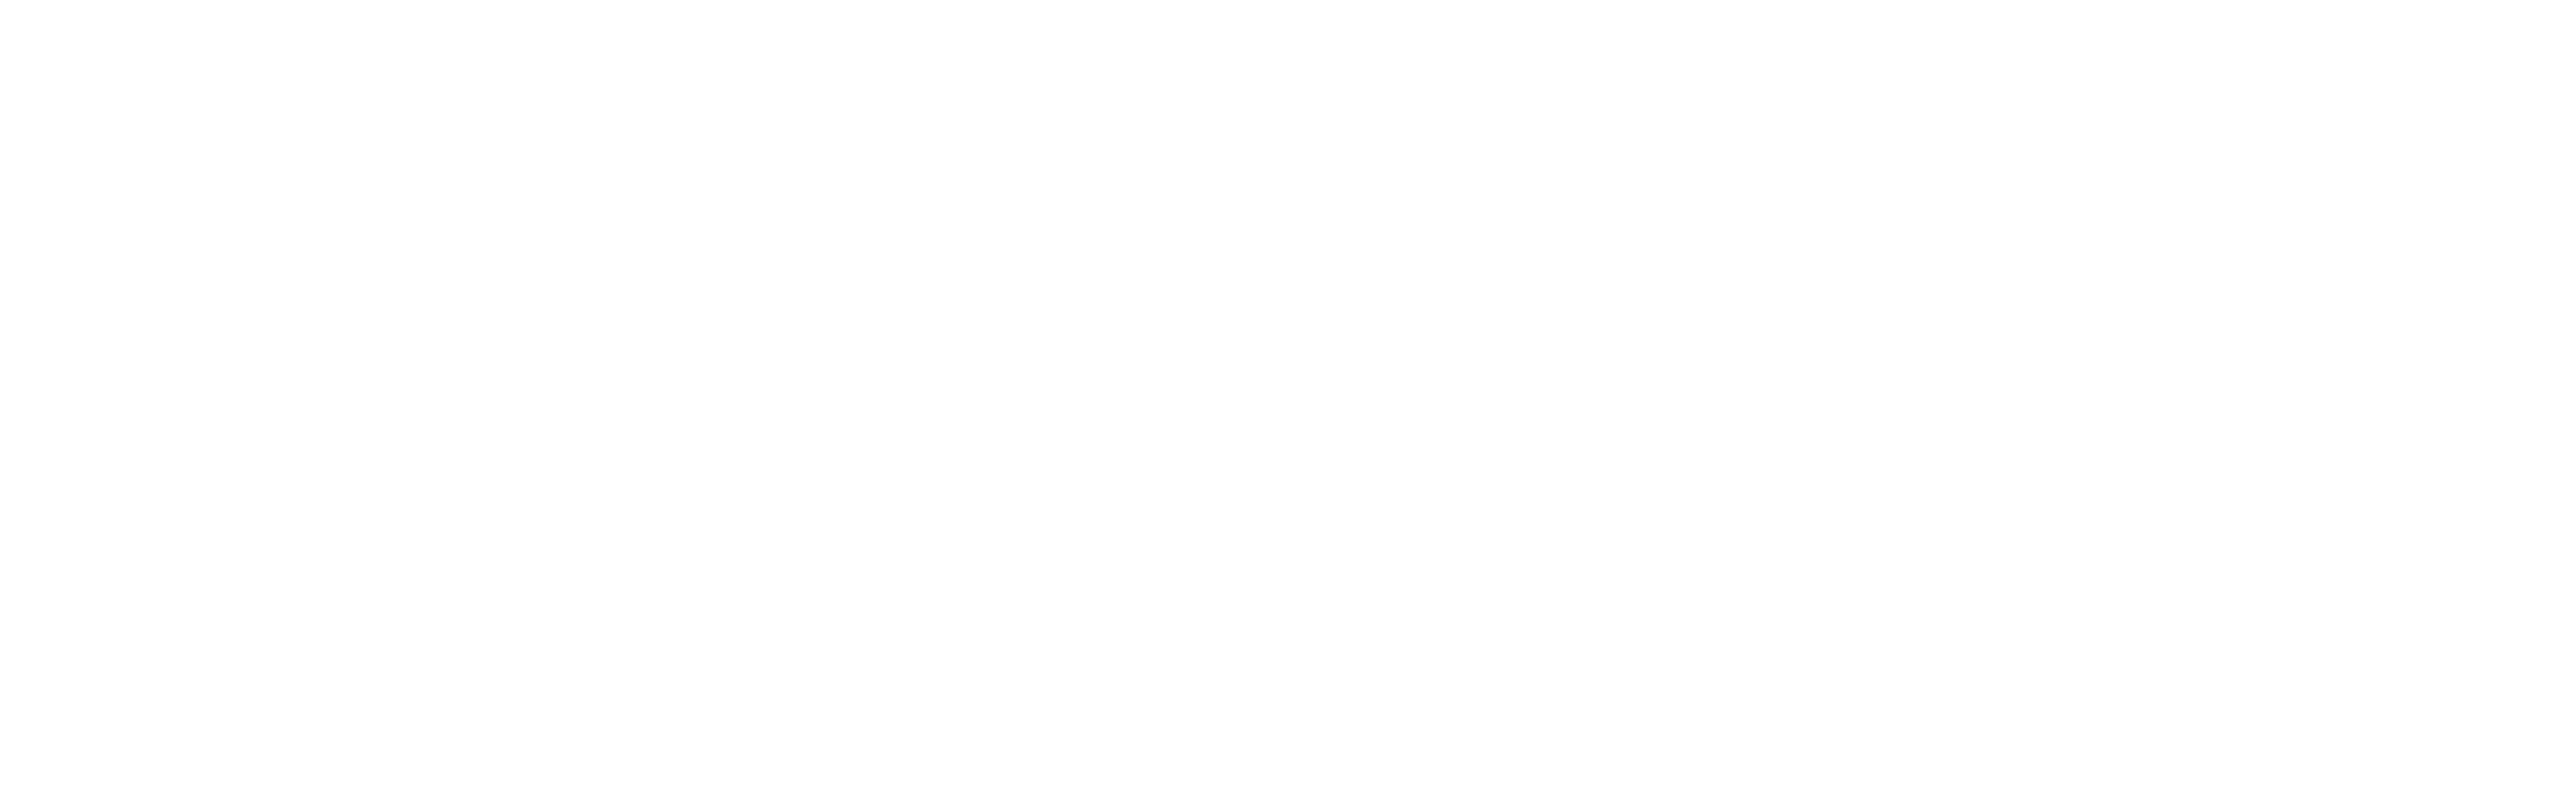 Budapest Logo - Story Budapest